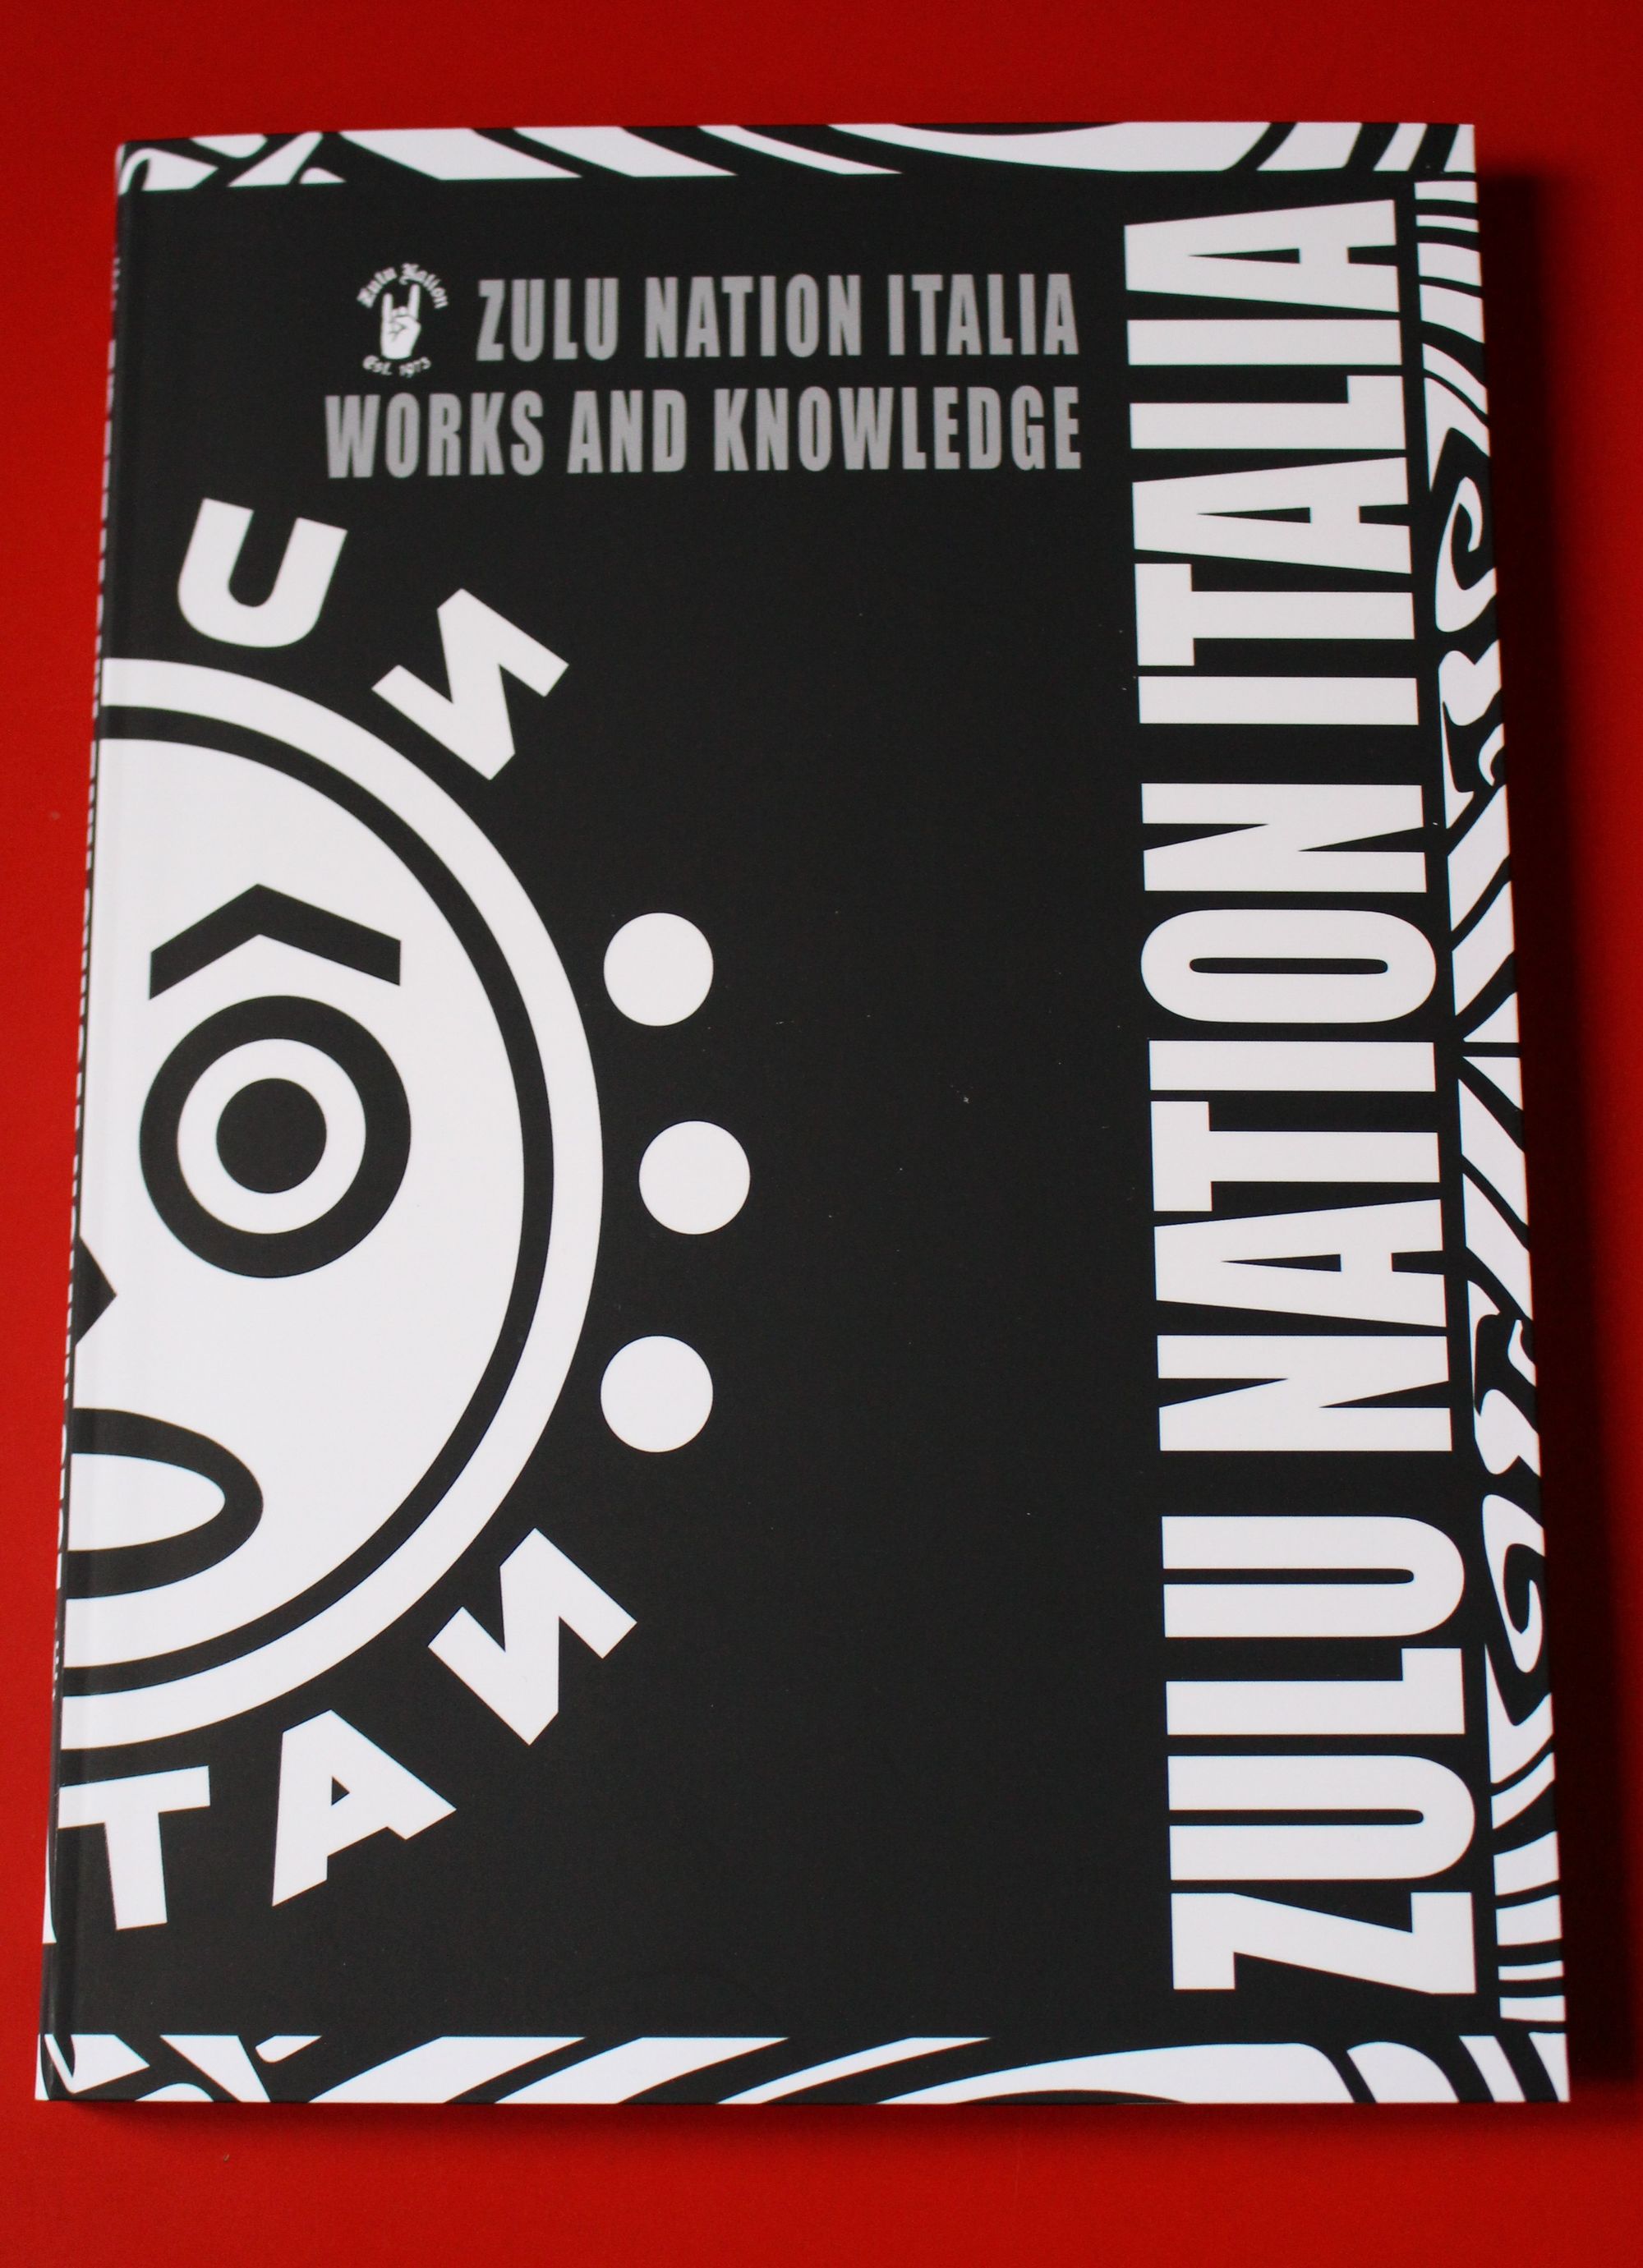 Book: Zulu Nation Italia Works & Knowledge